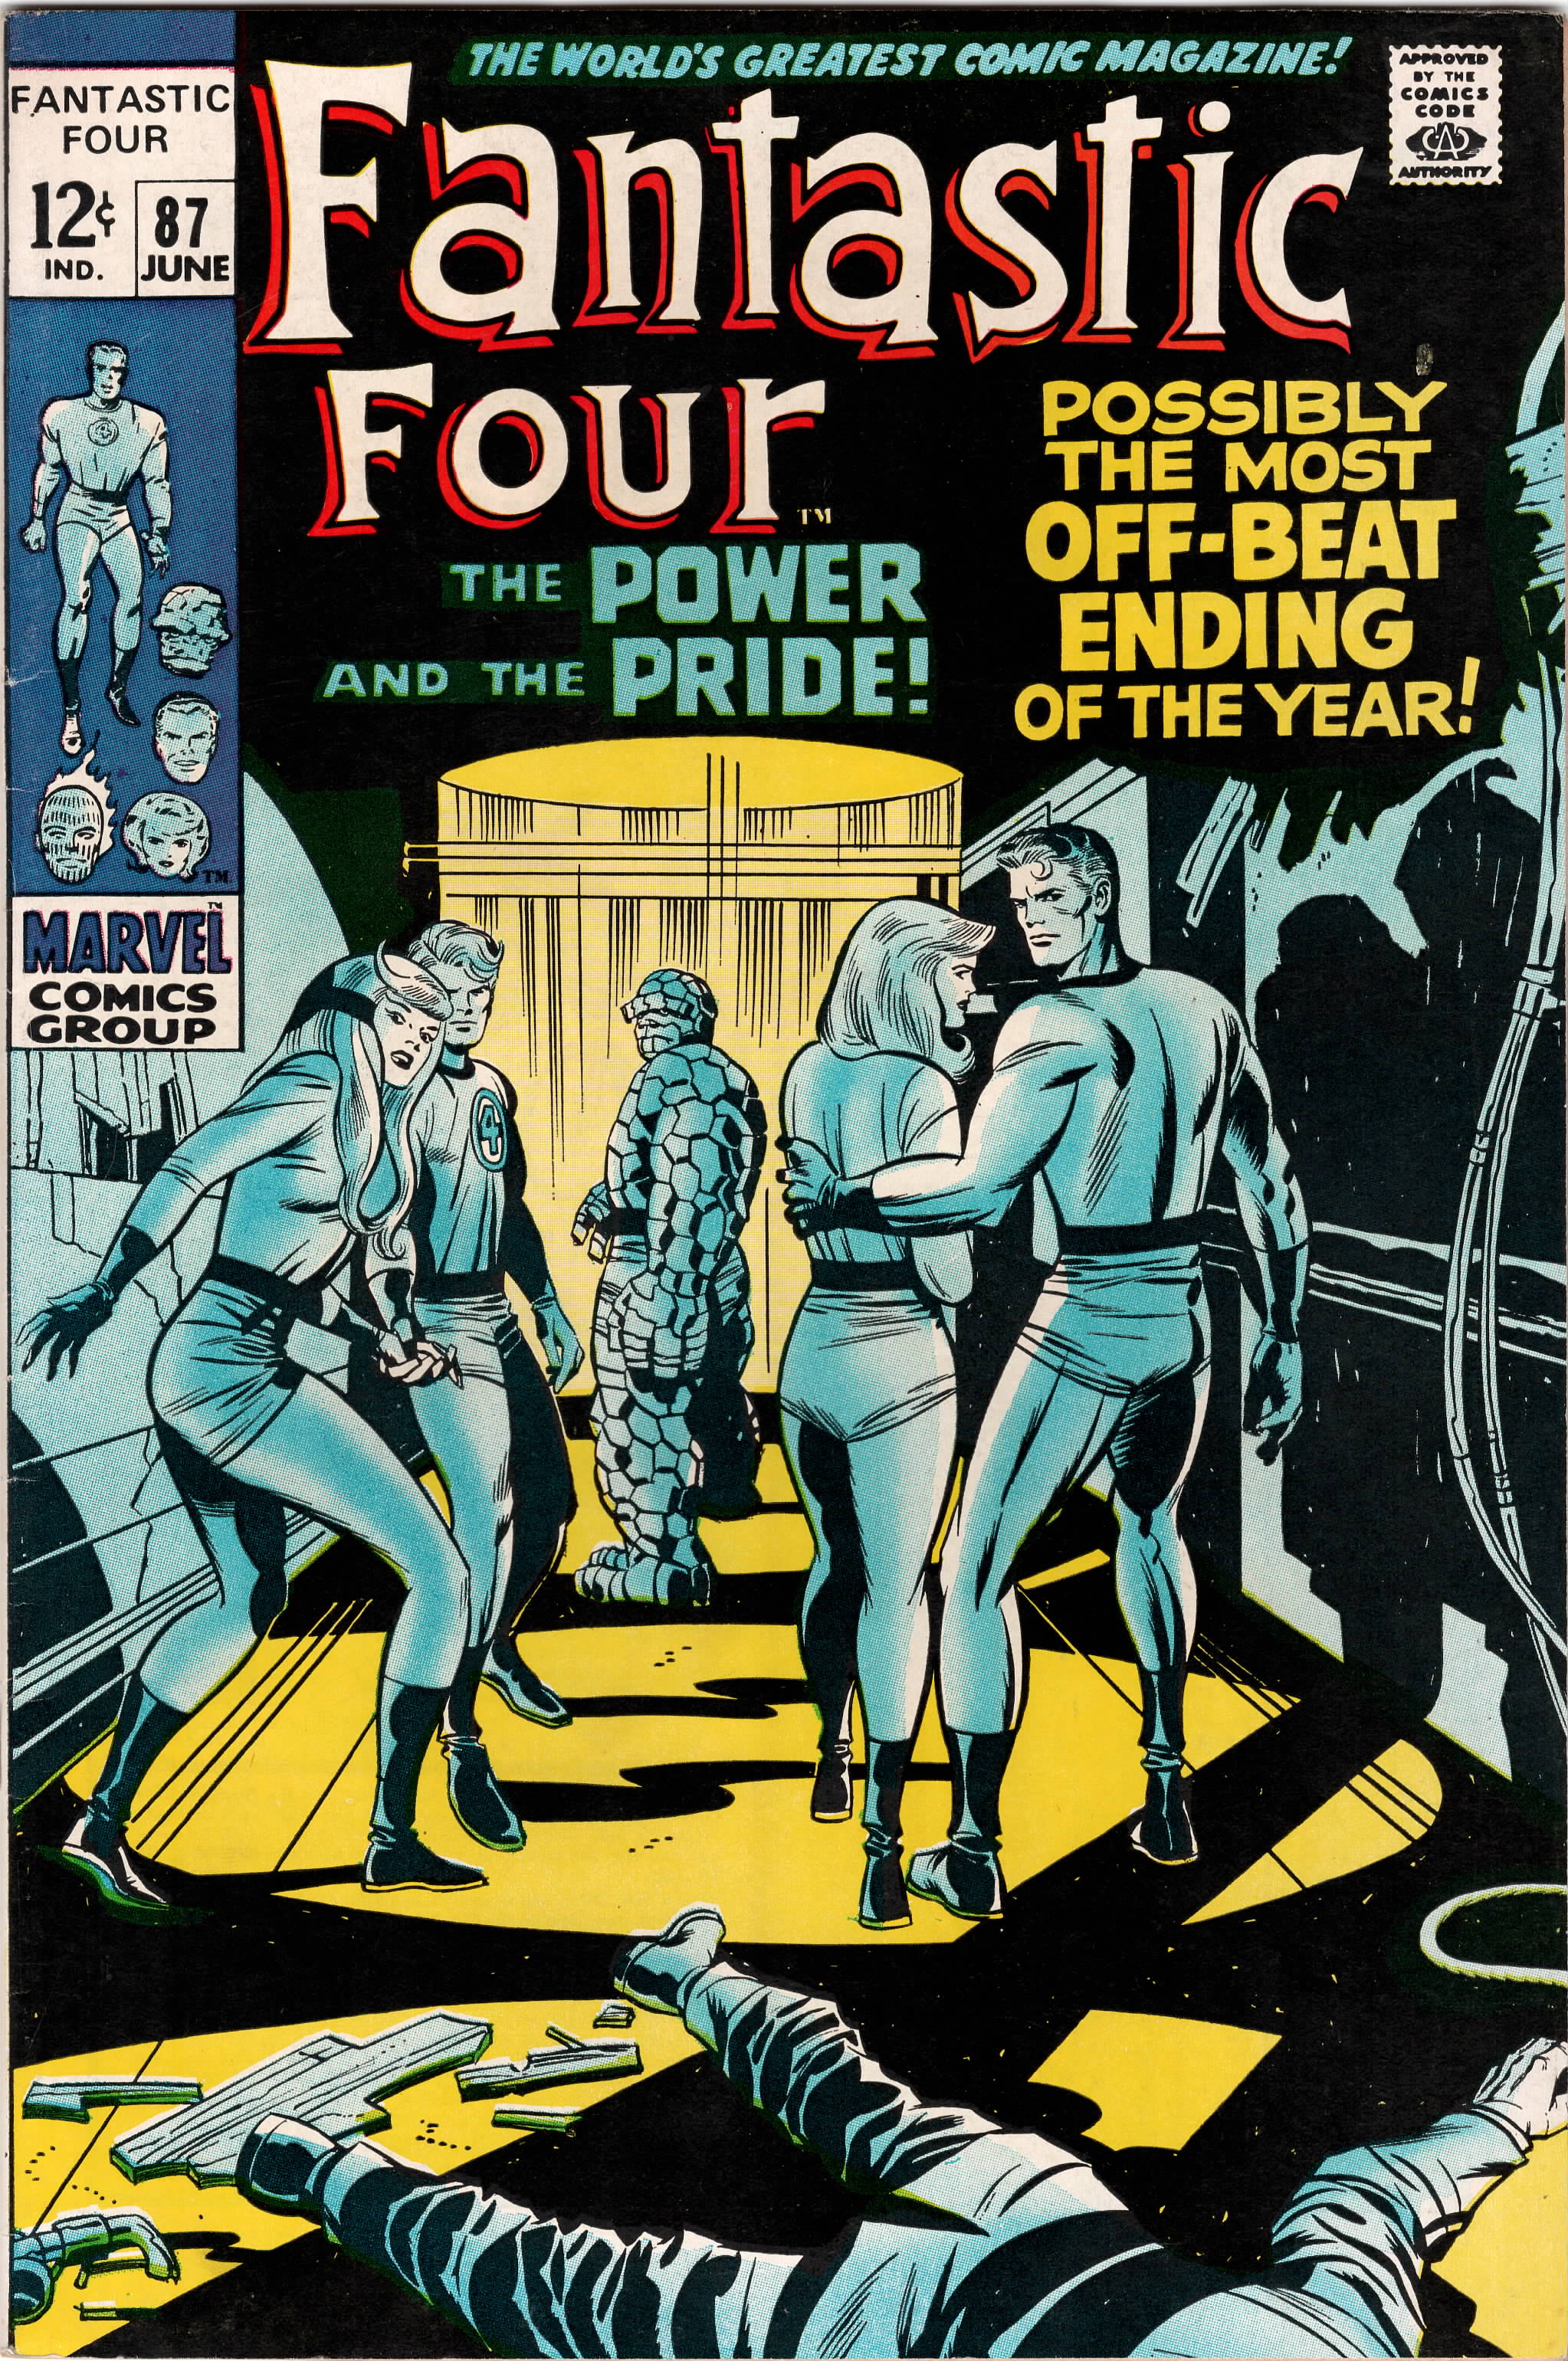 Fantastic Four #087